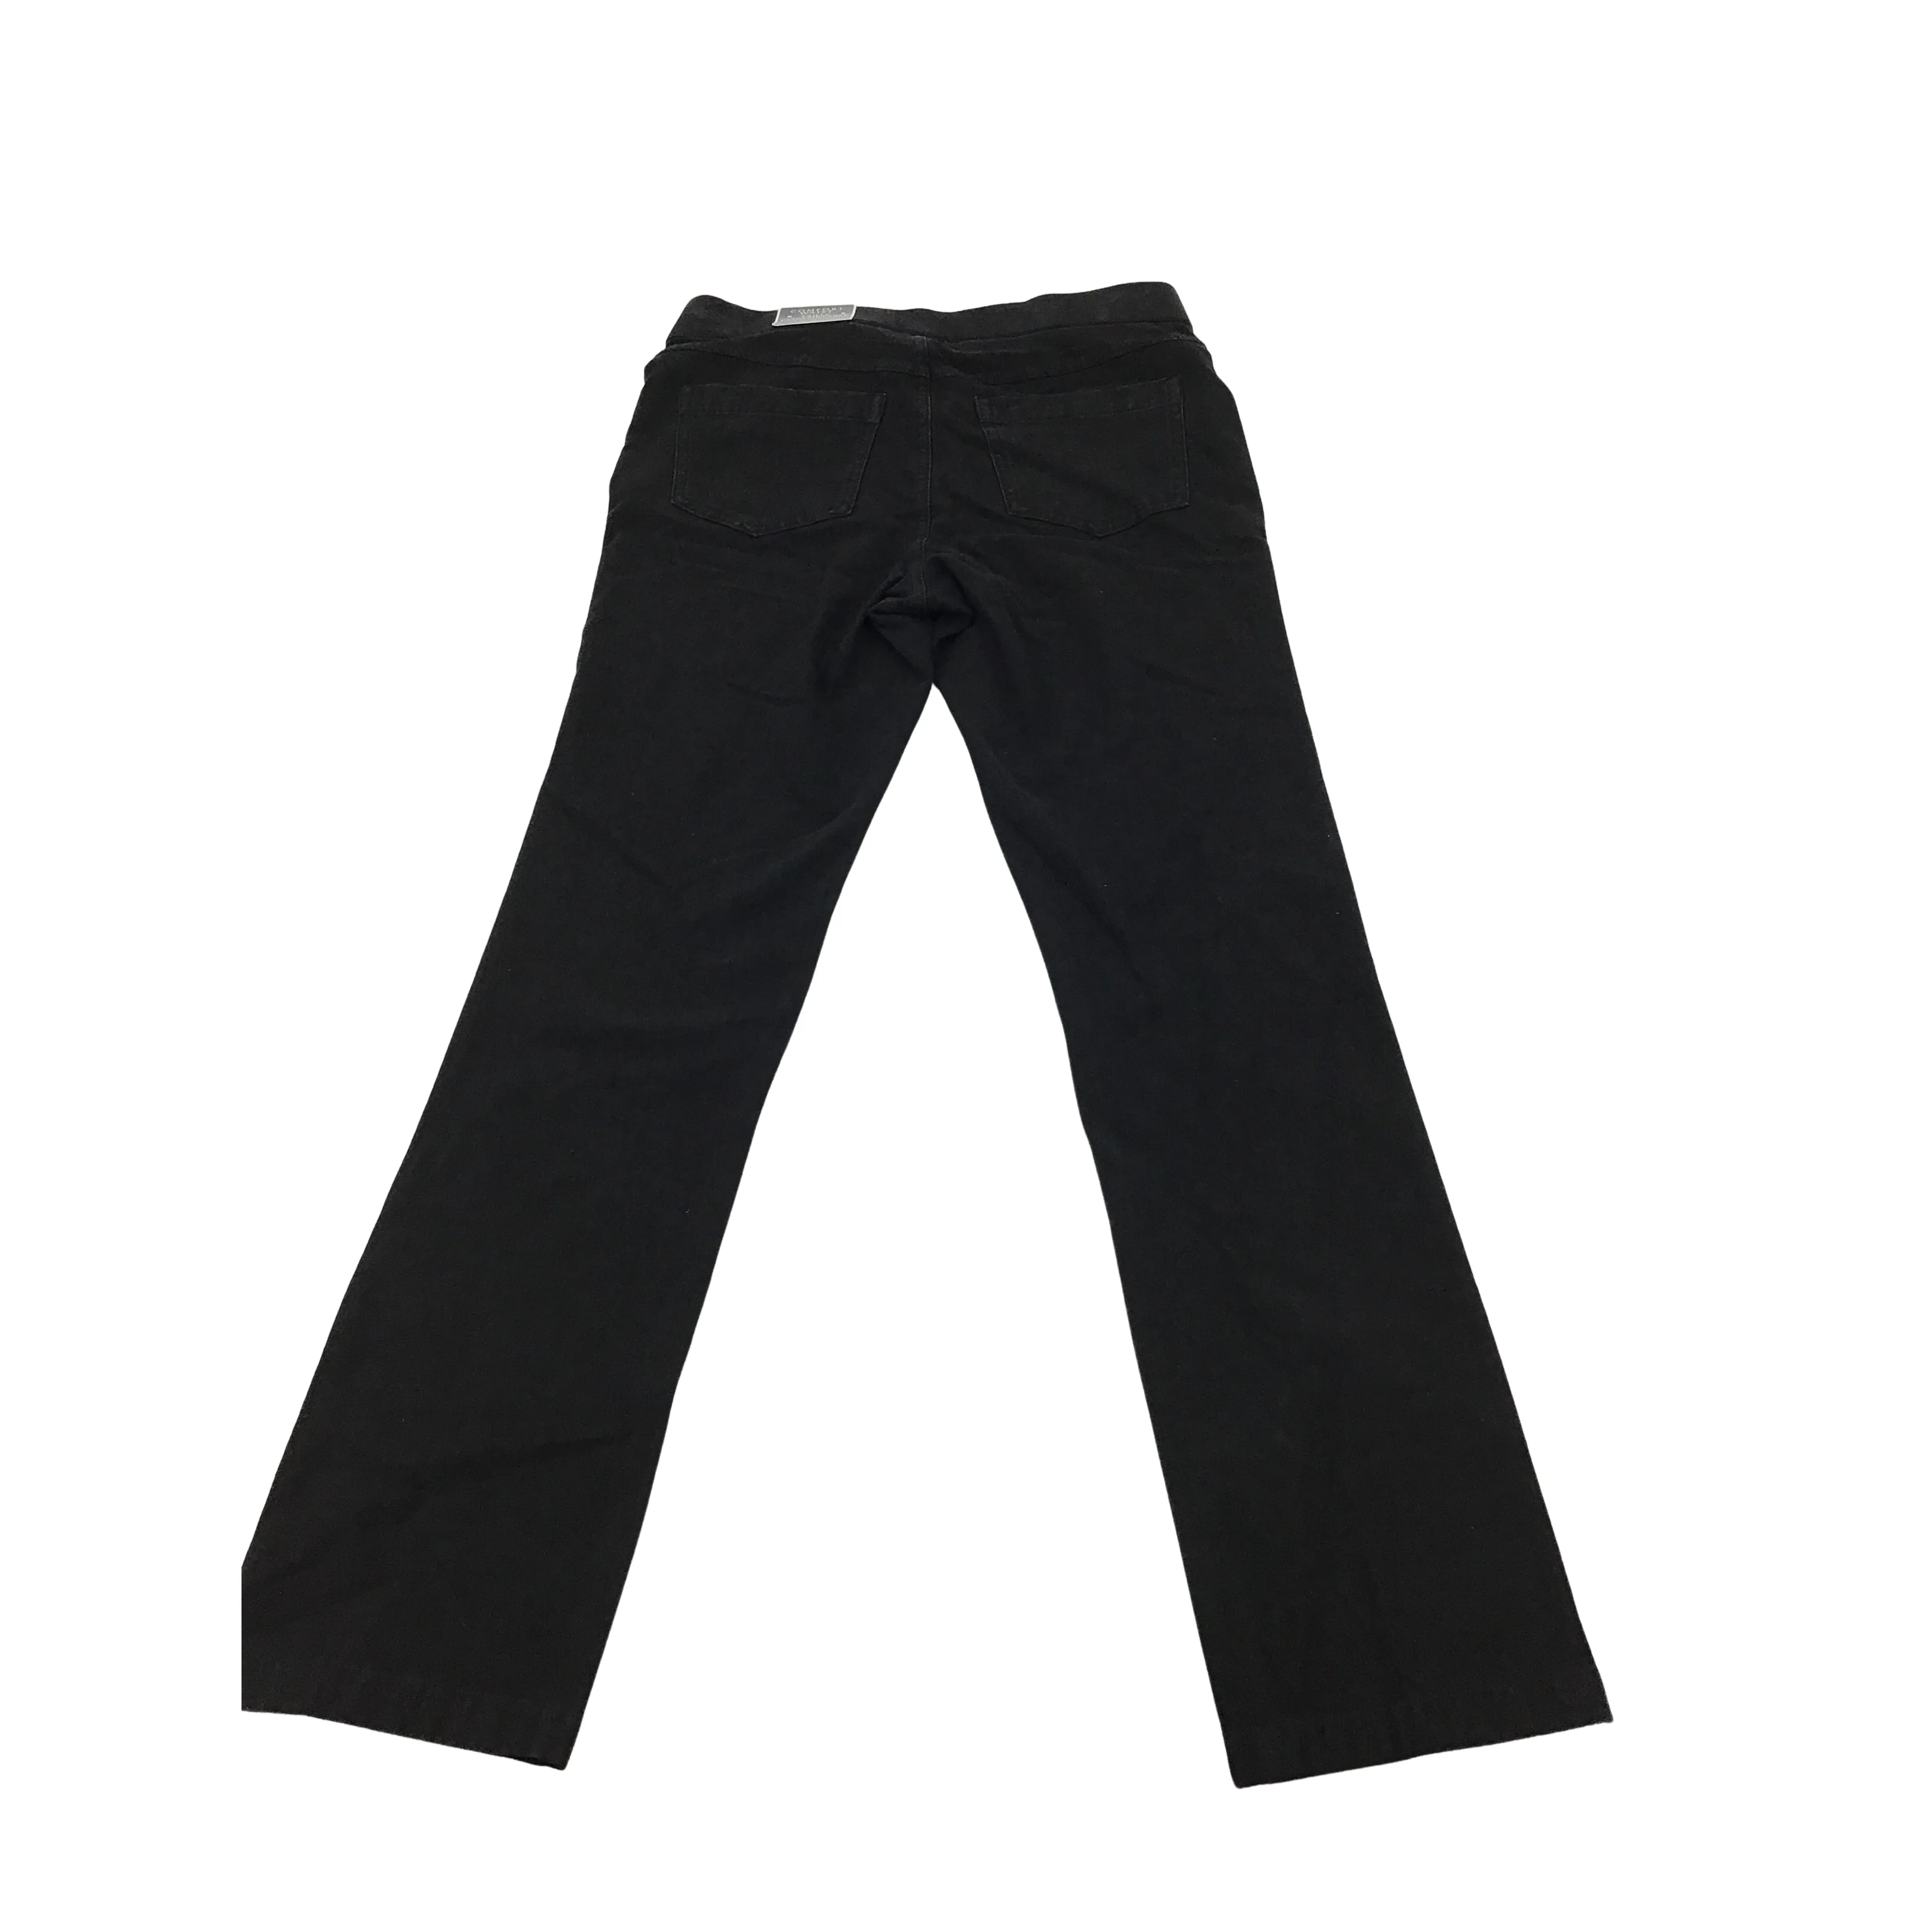 Karen Scott Women’s Black Pants / Size Small Petite